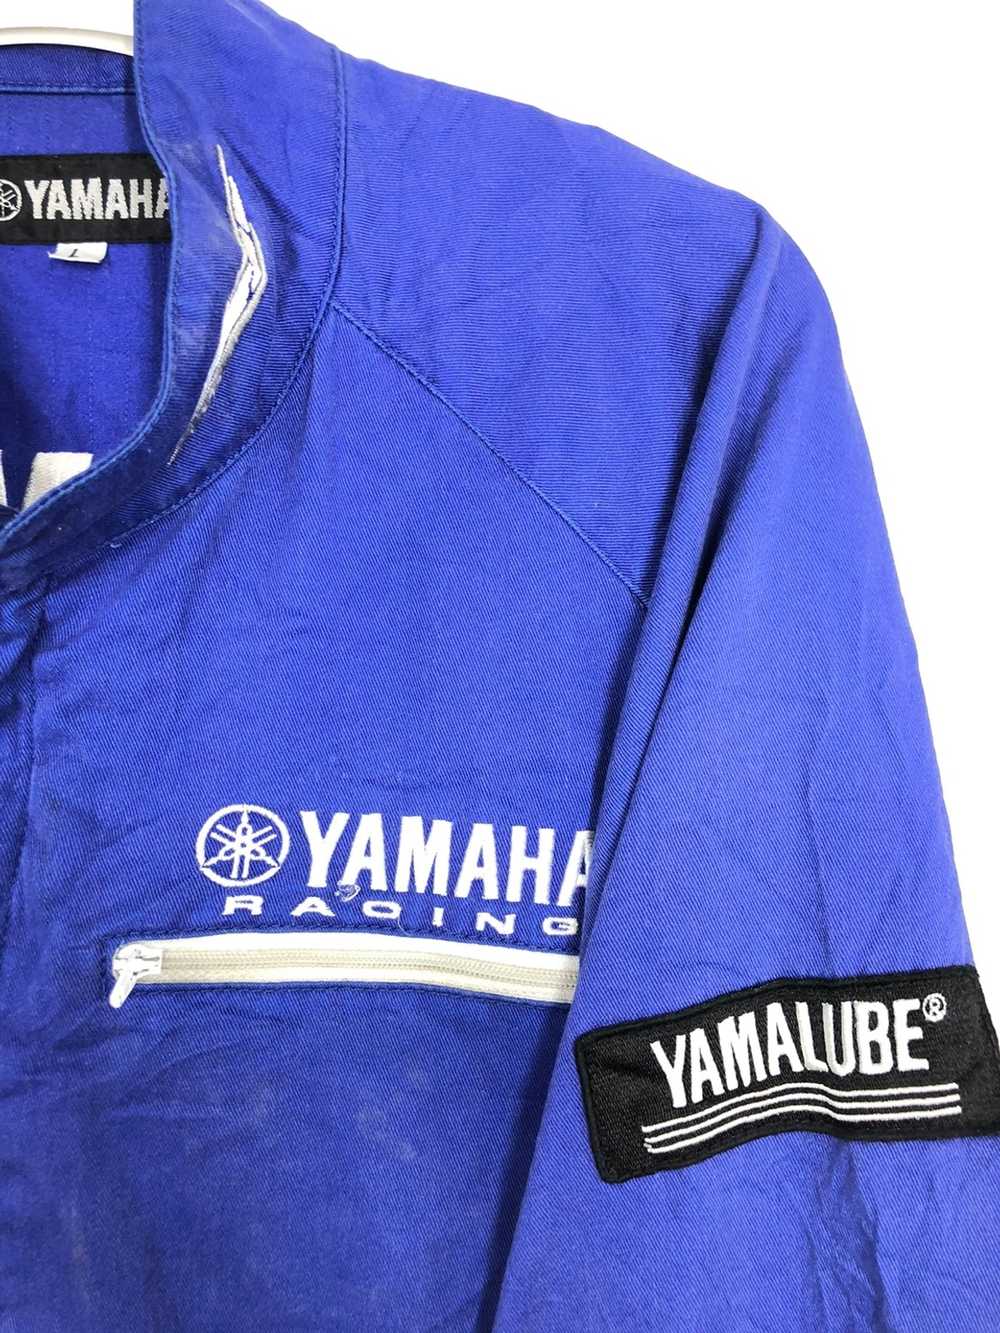 Vintage × Yamaha YAMAHA Team Racing Overall Suit - Gem